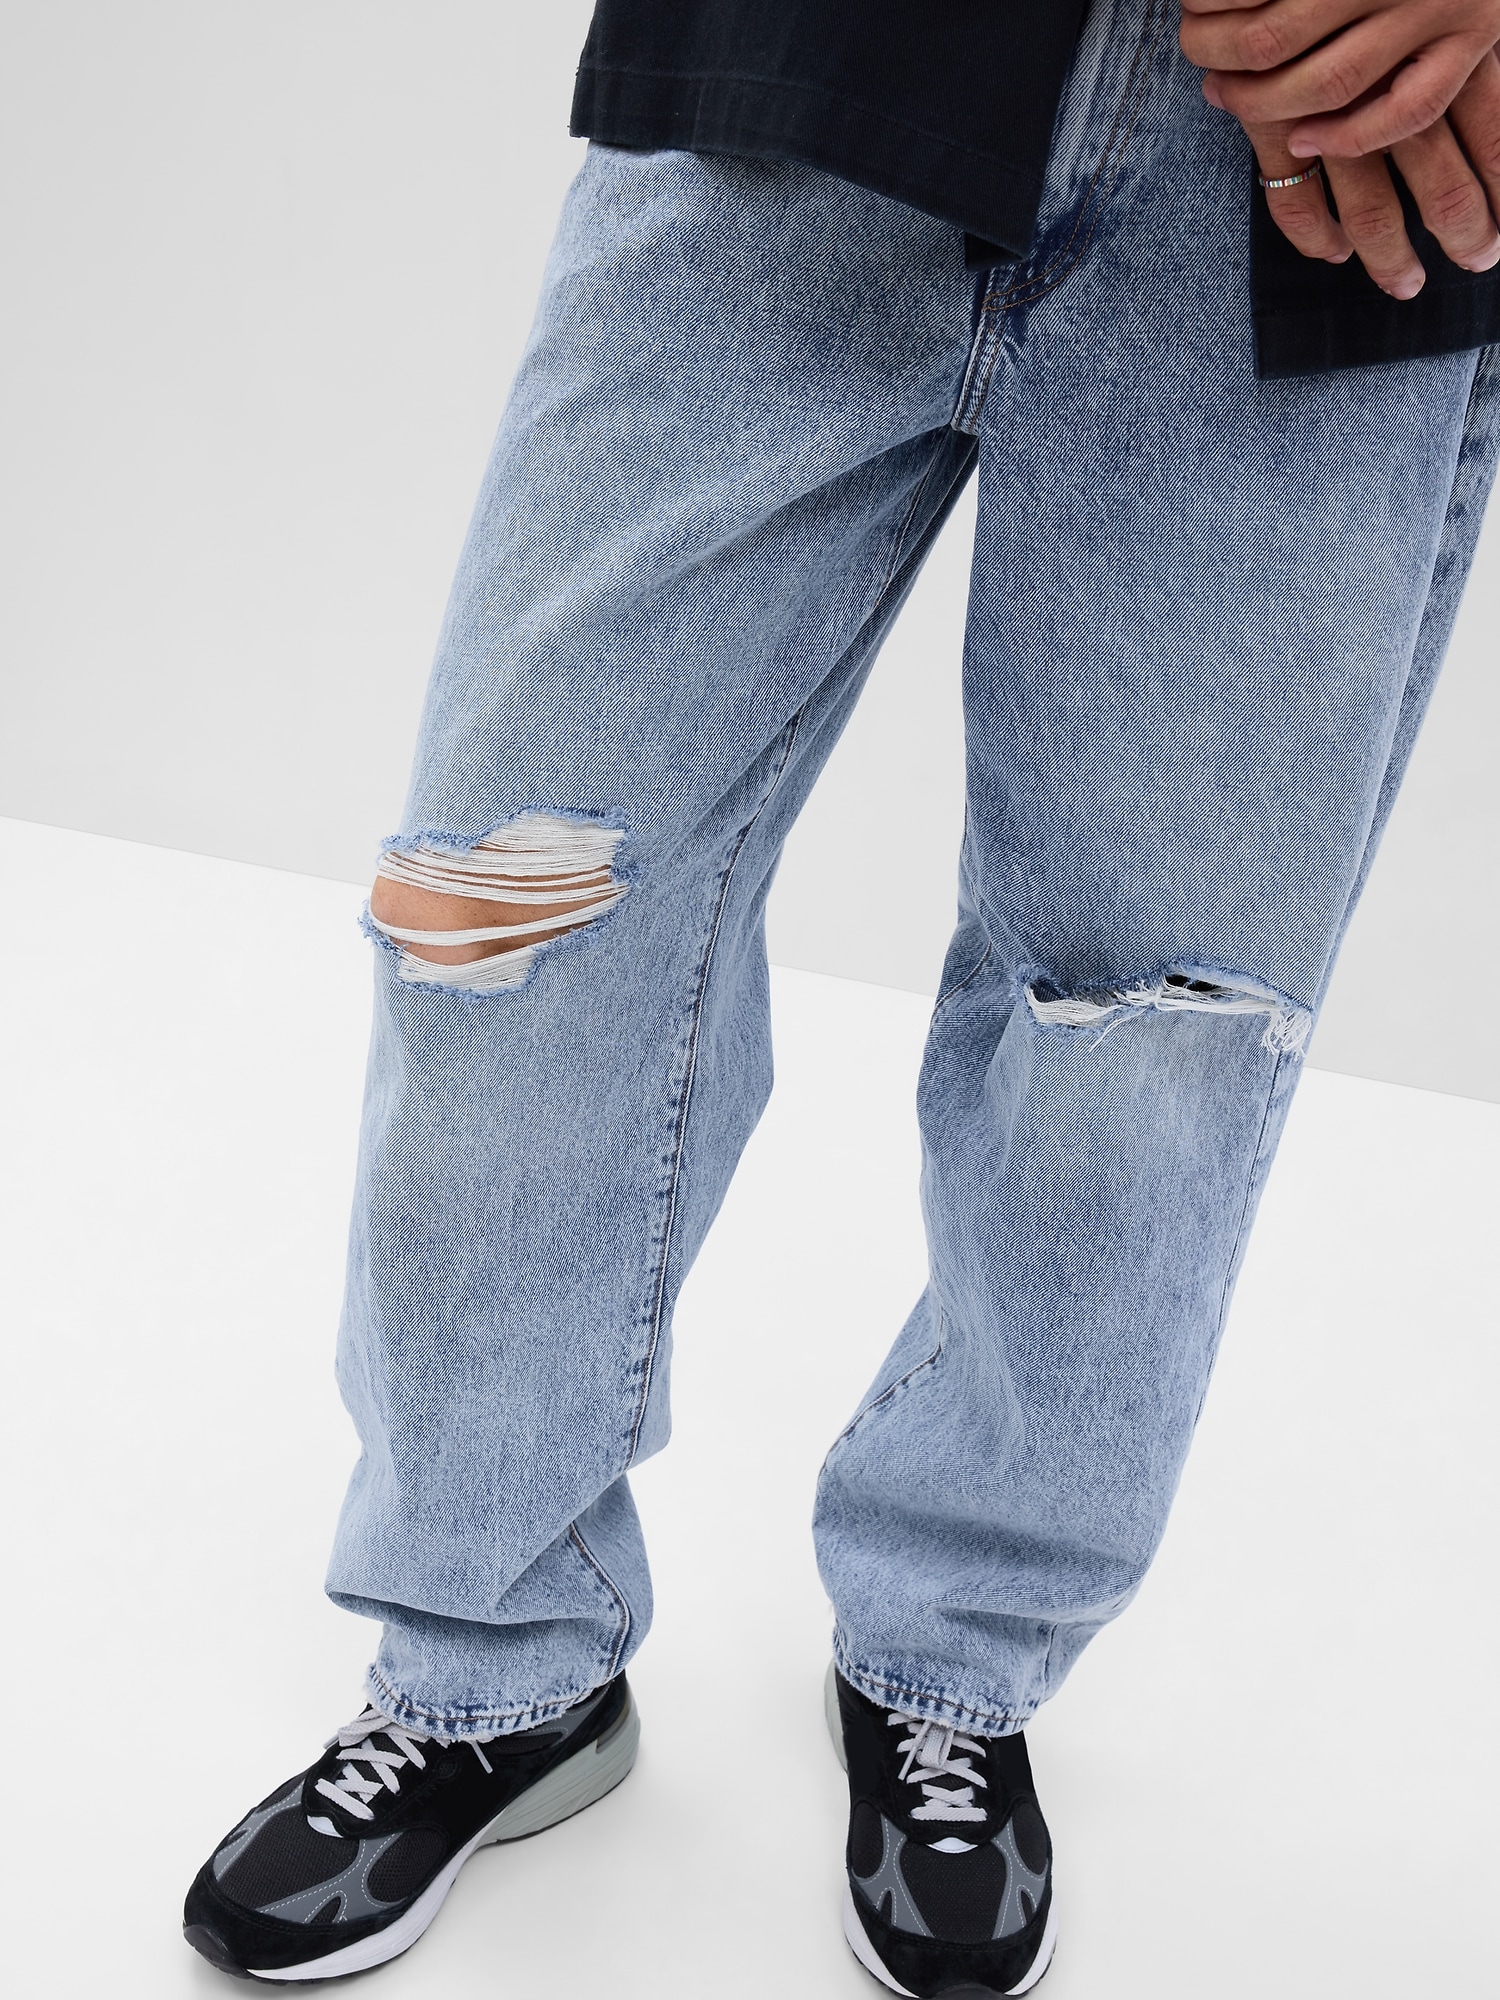 B91xZ Baggy Jeans for Men Men's Casual Pant Leg Zipper Stripe Classic Style  High Stretch Tight Hole Small Leg Jeans Black,Size 40 